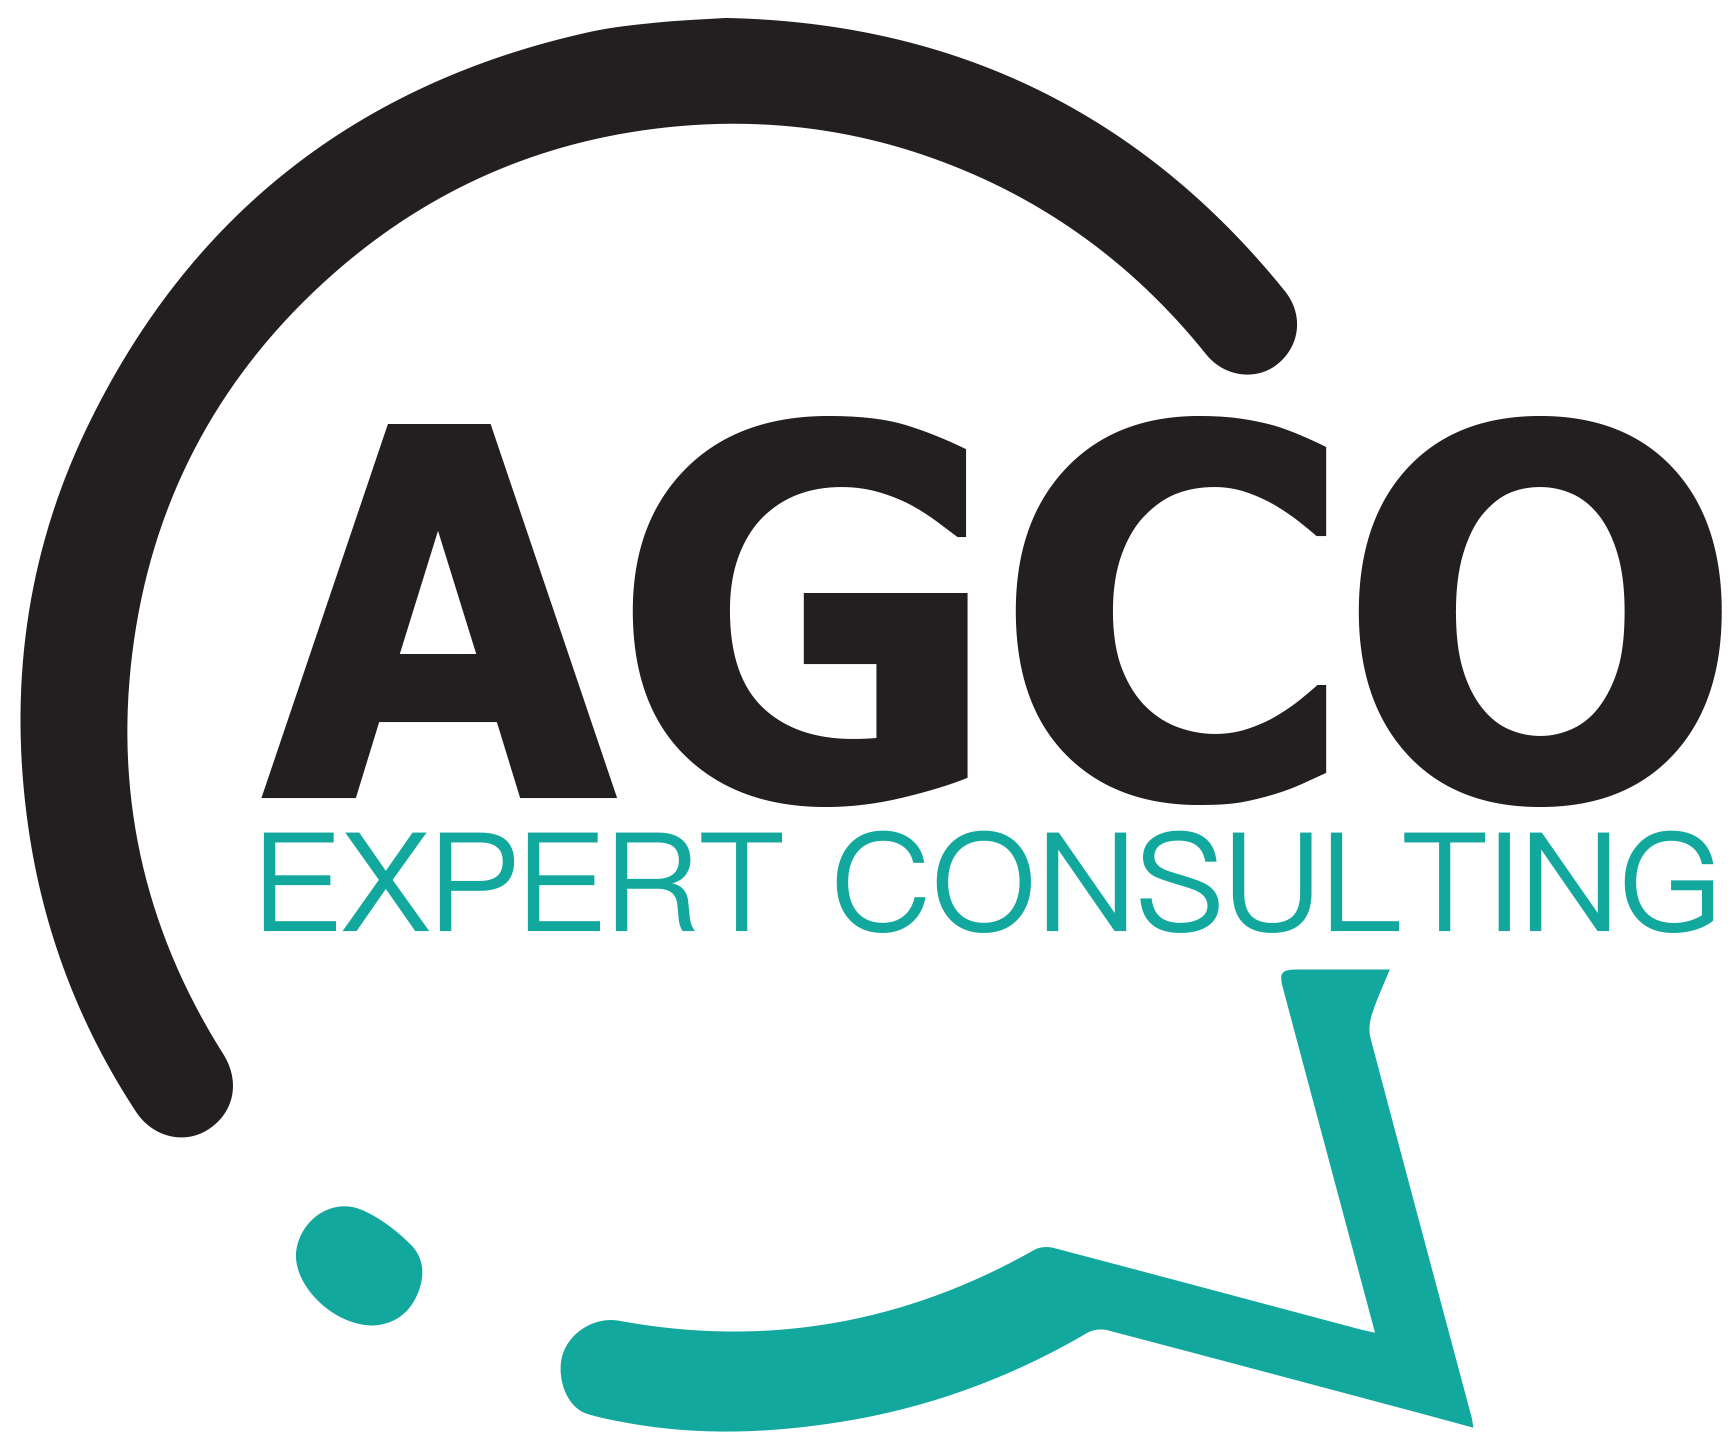 AGCO logo.png